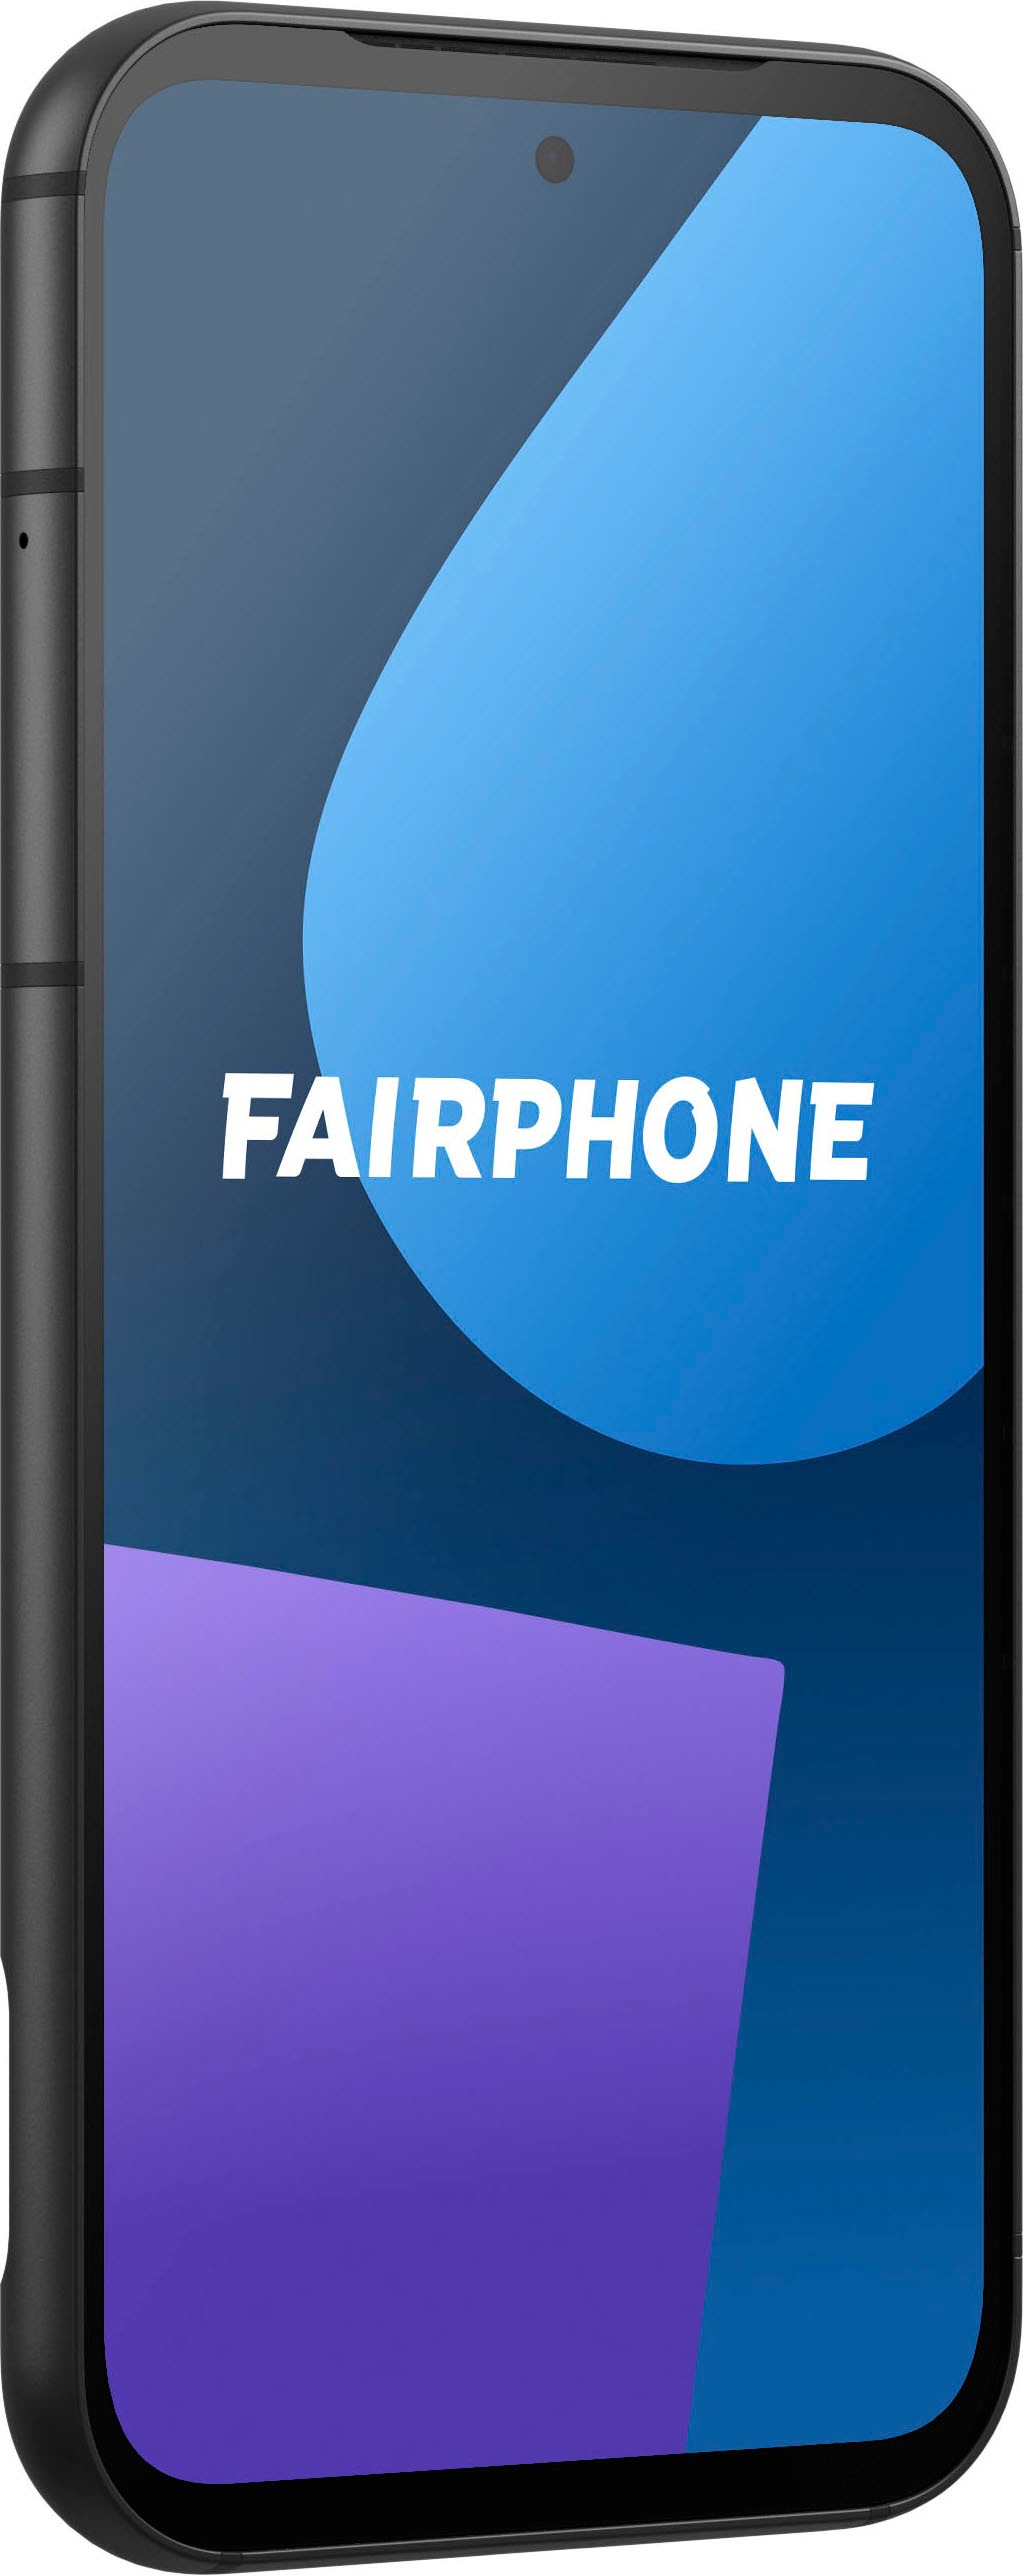 Fairphone Smartphone »FAIRPHONE 50 GB MP 256 5«, sky blue, auf Zoll, bestellen Kamera cm/6,46 Speicherplatz, Rechnung 16,40